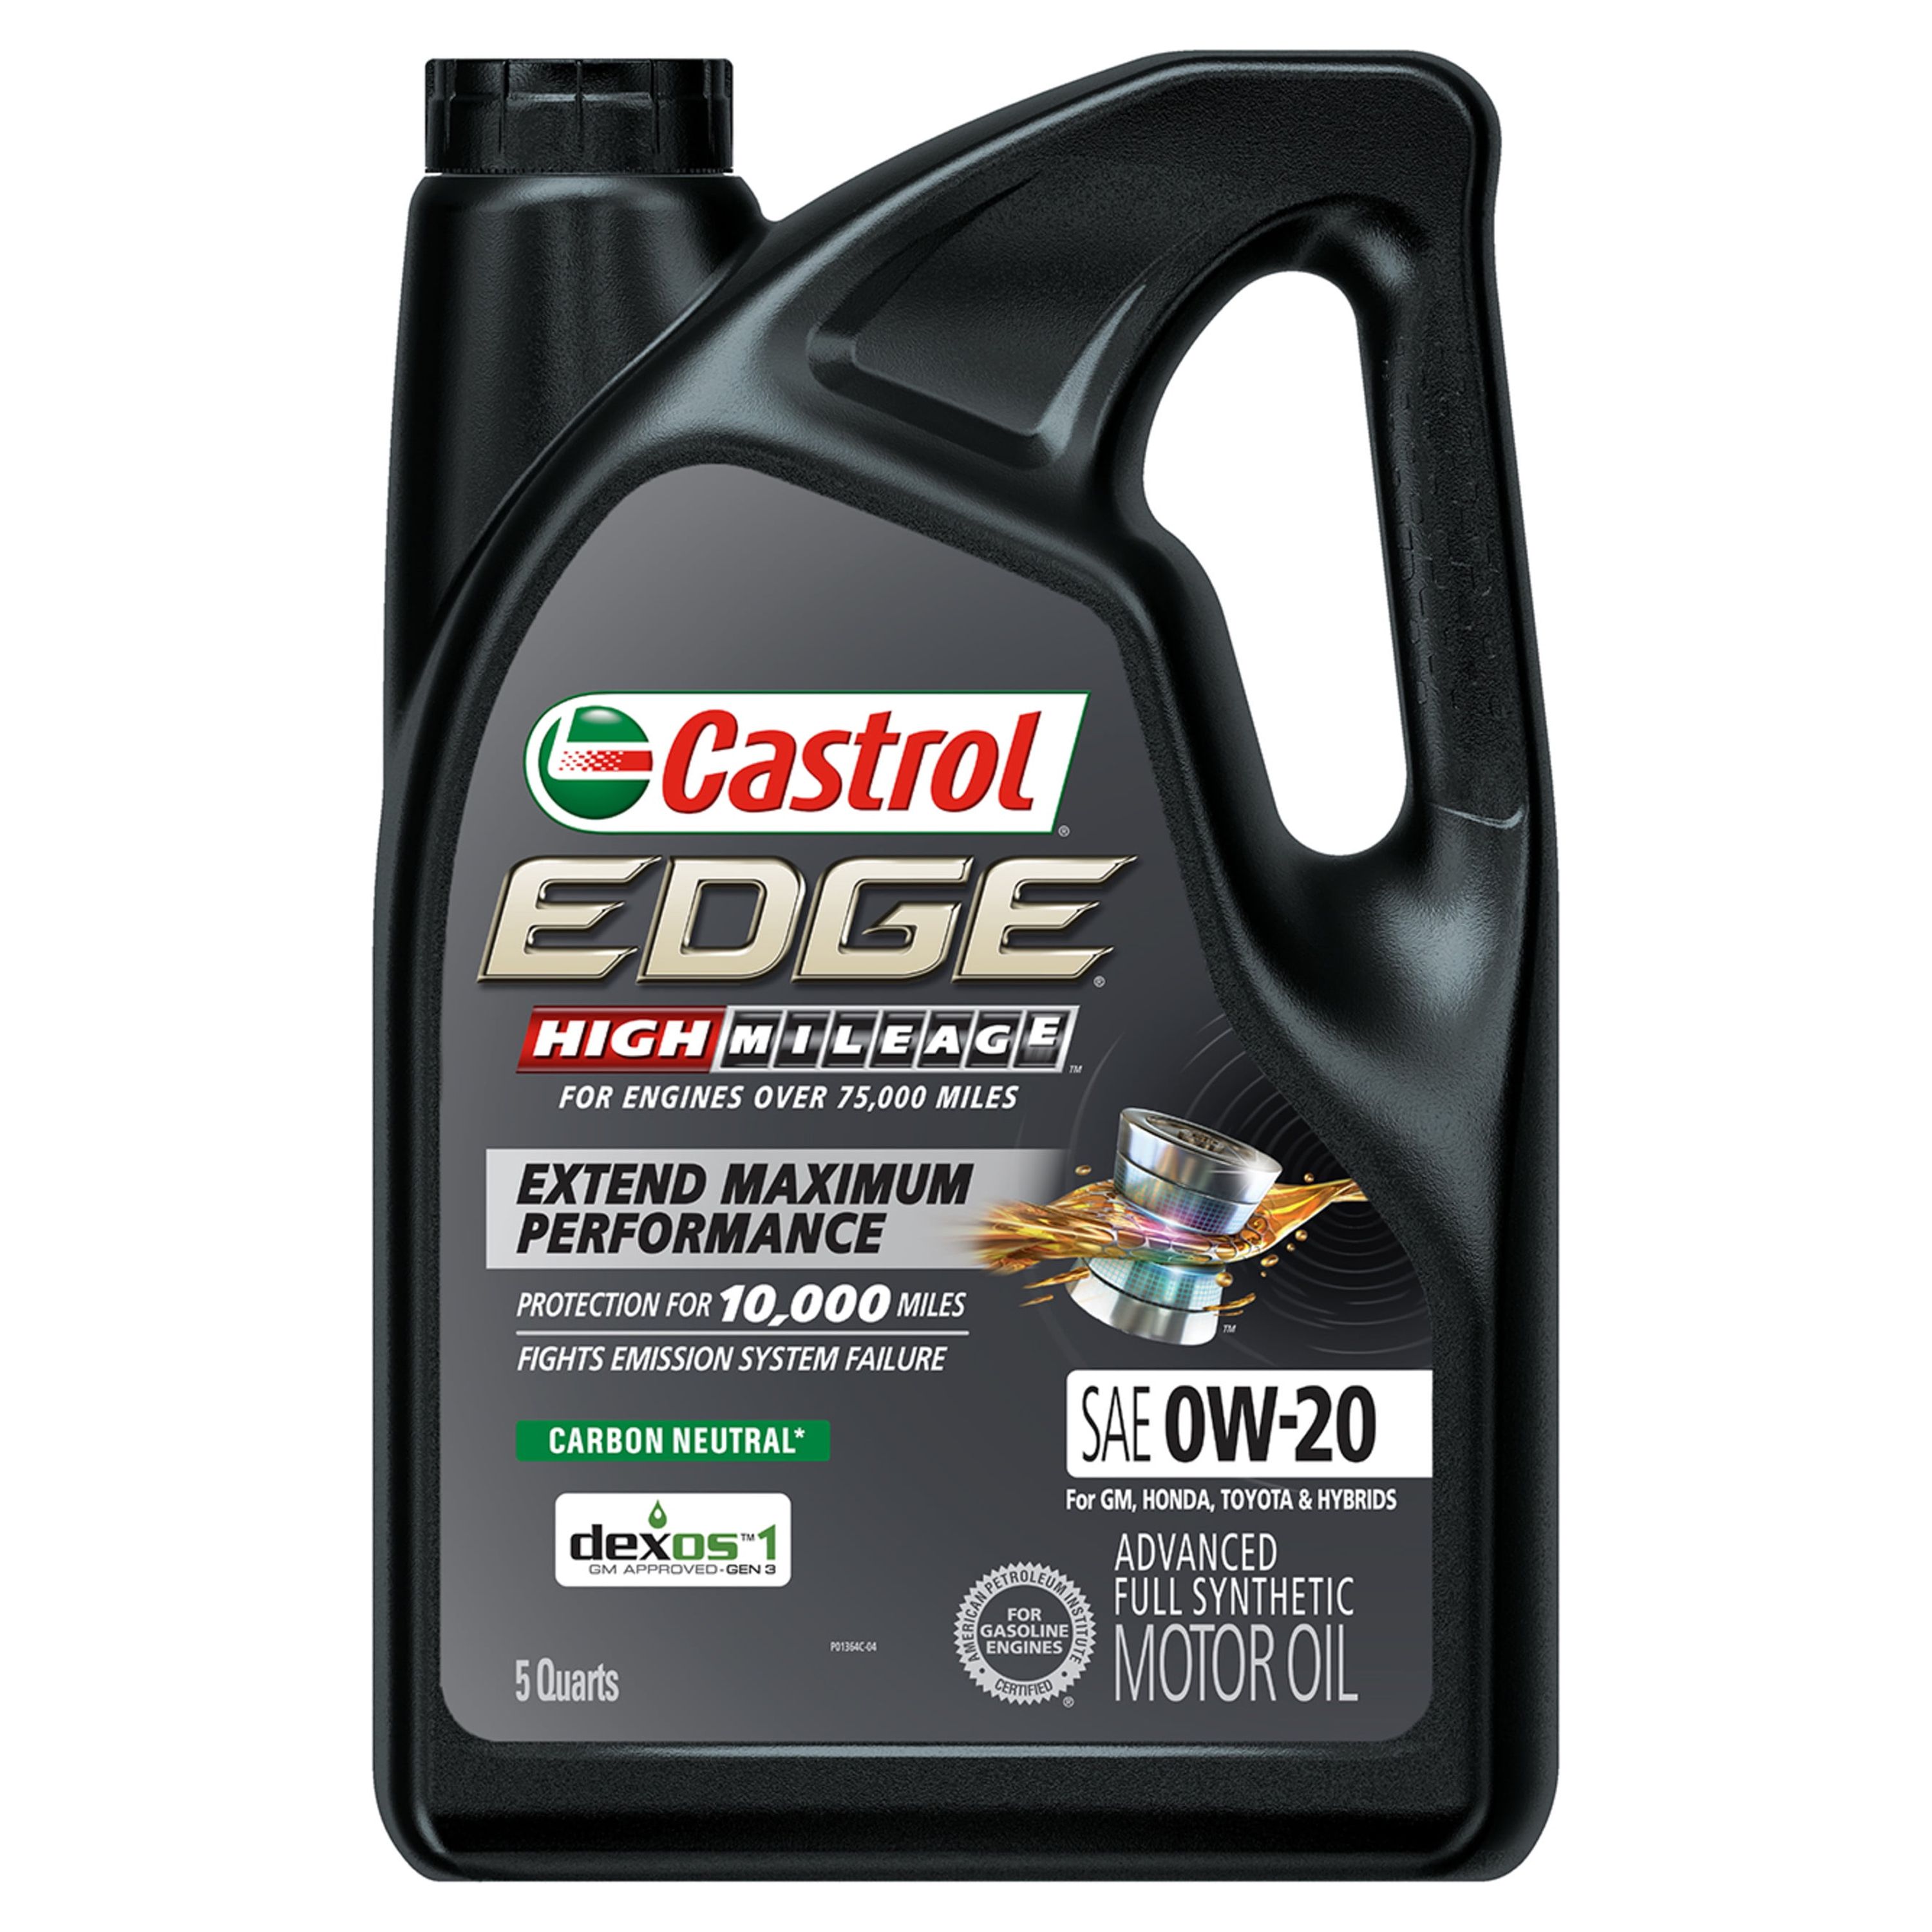 Castrol Edge High Mileage 0W-20 Advanced Full Synthetic Motor Oil, 5 Quarts - image 1 of 10